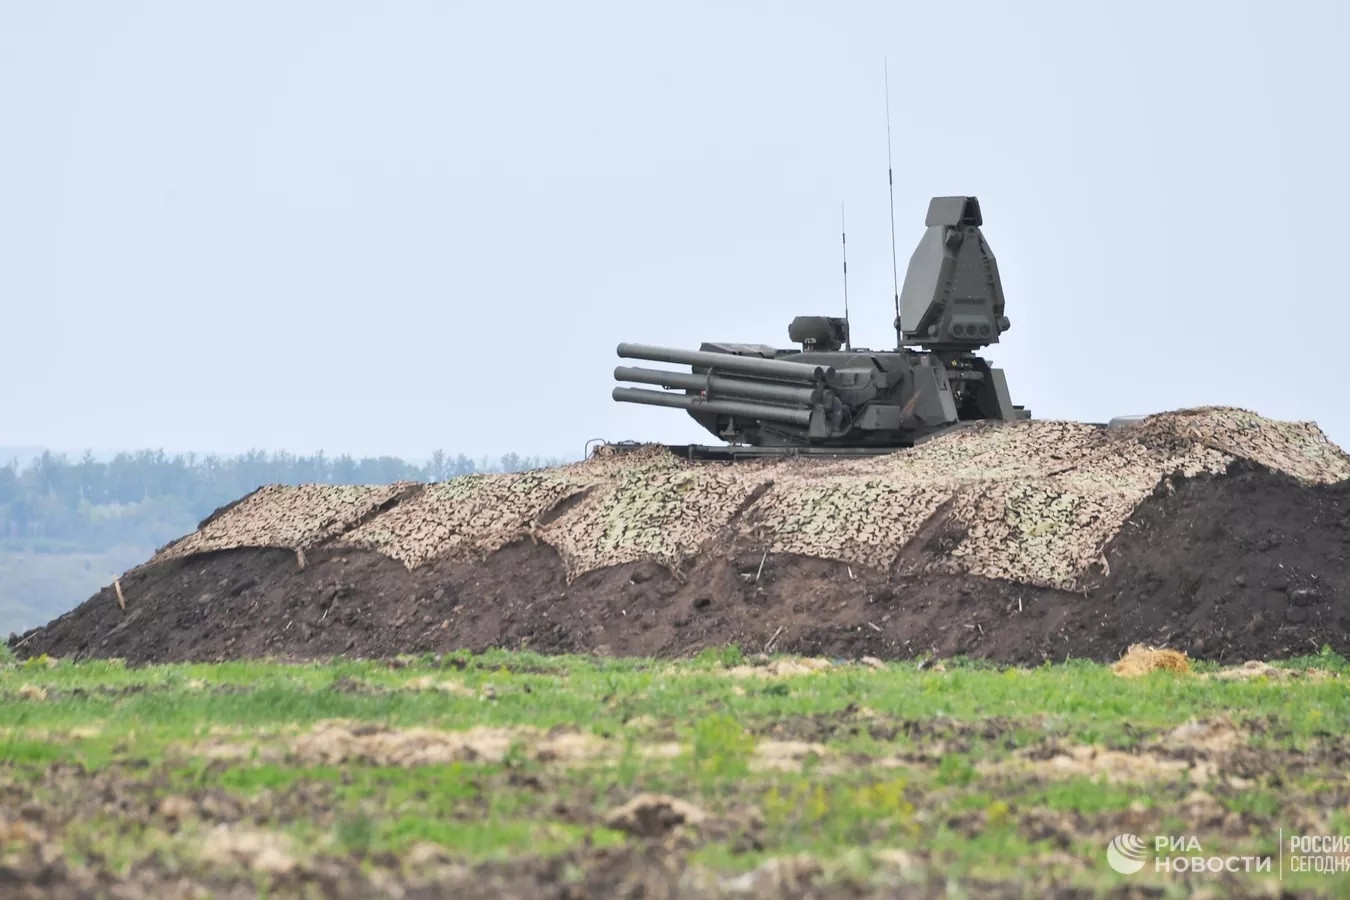 Ukraine tiếp tục áp sát Bakhmut, tuyên bố kiểm soát một số khu vực